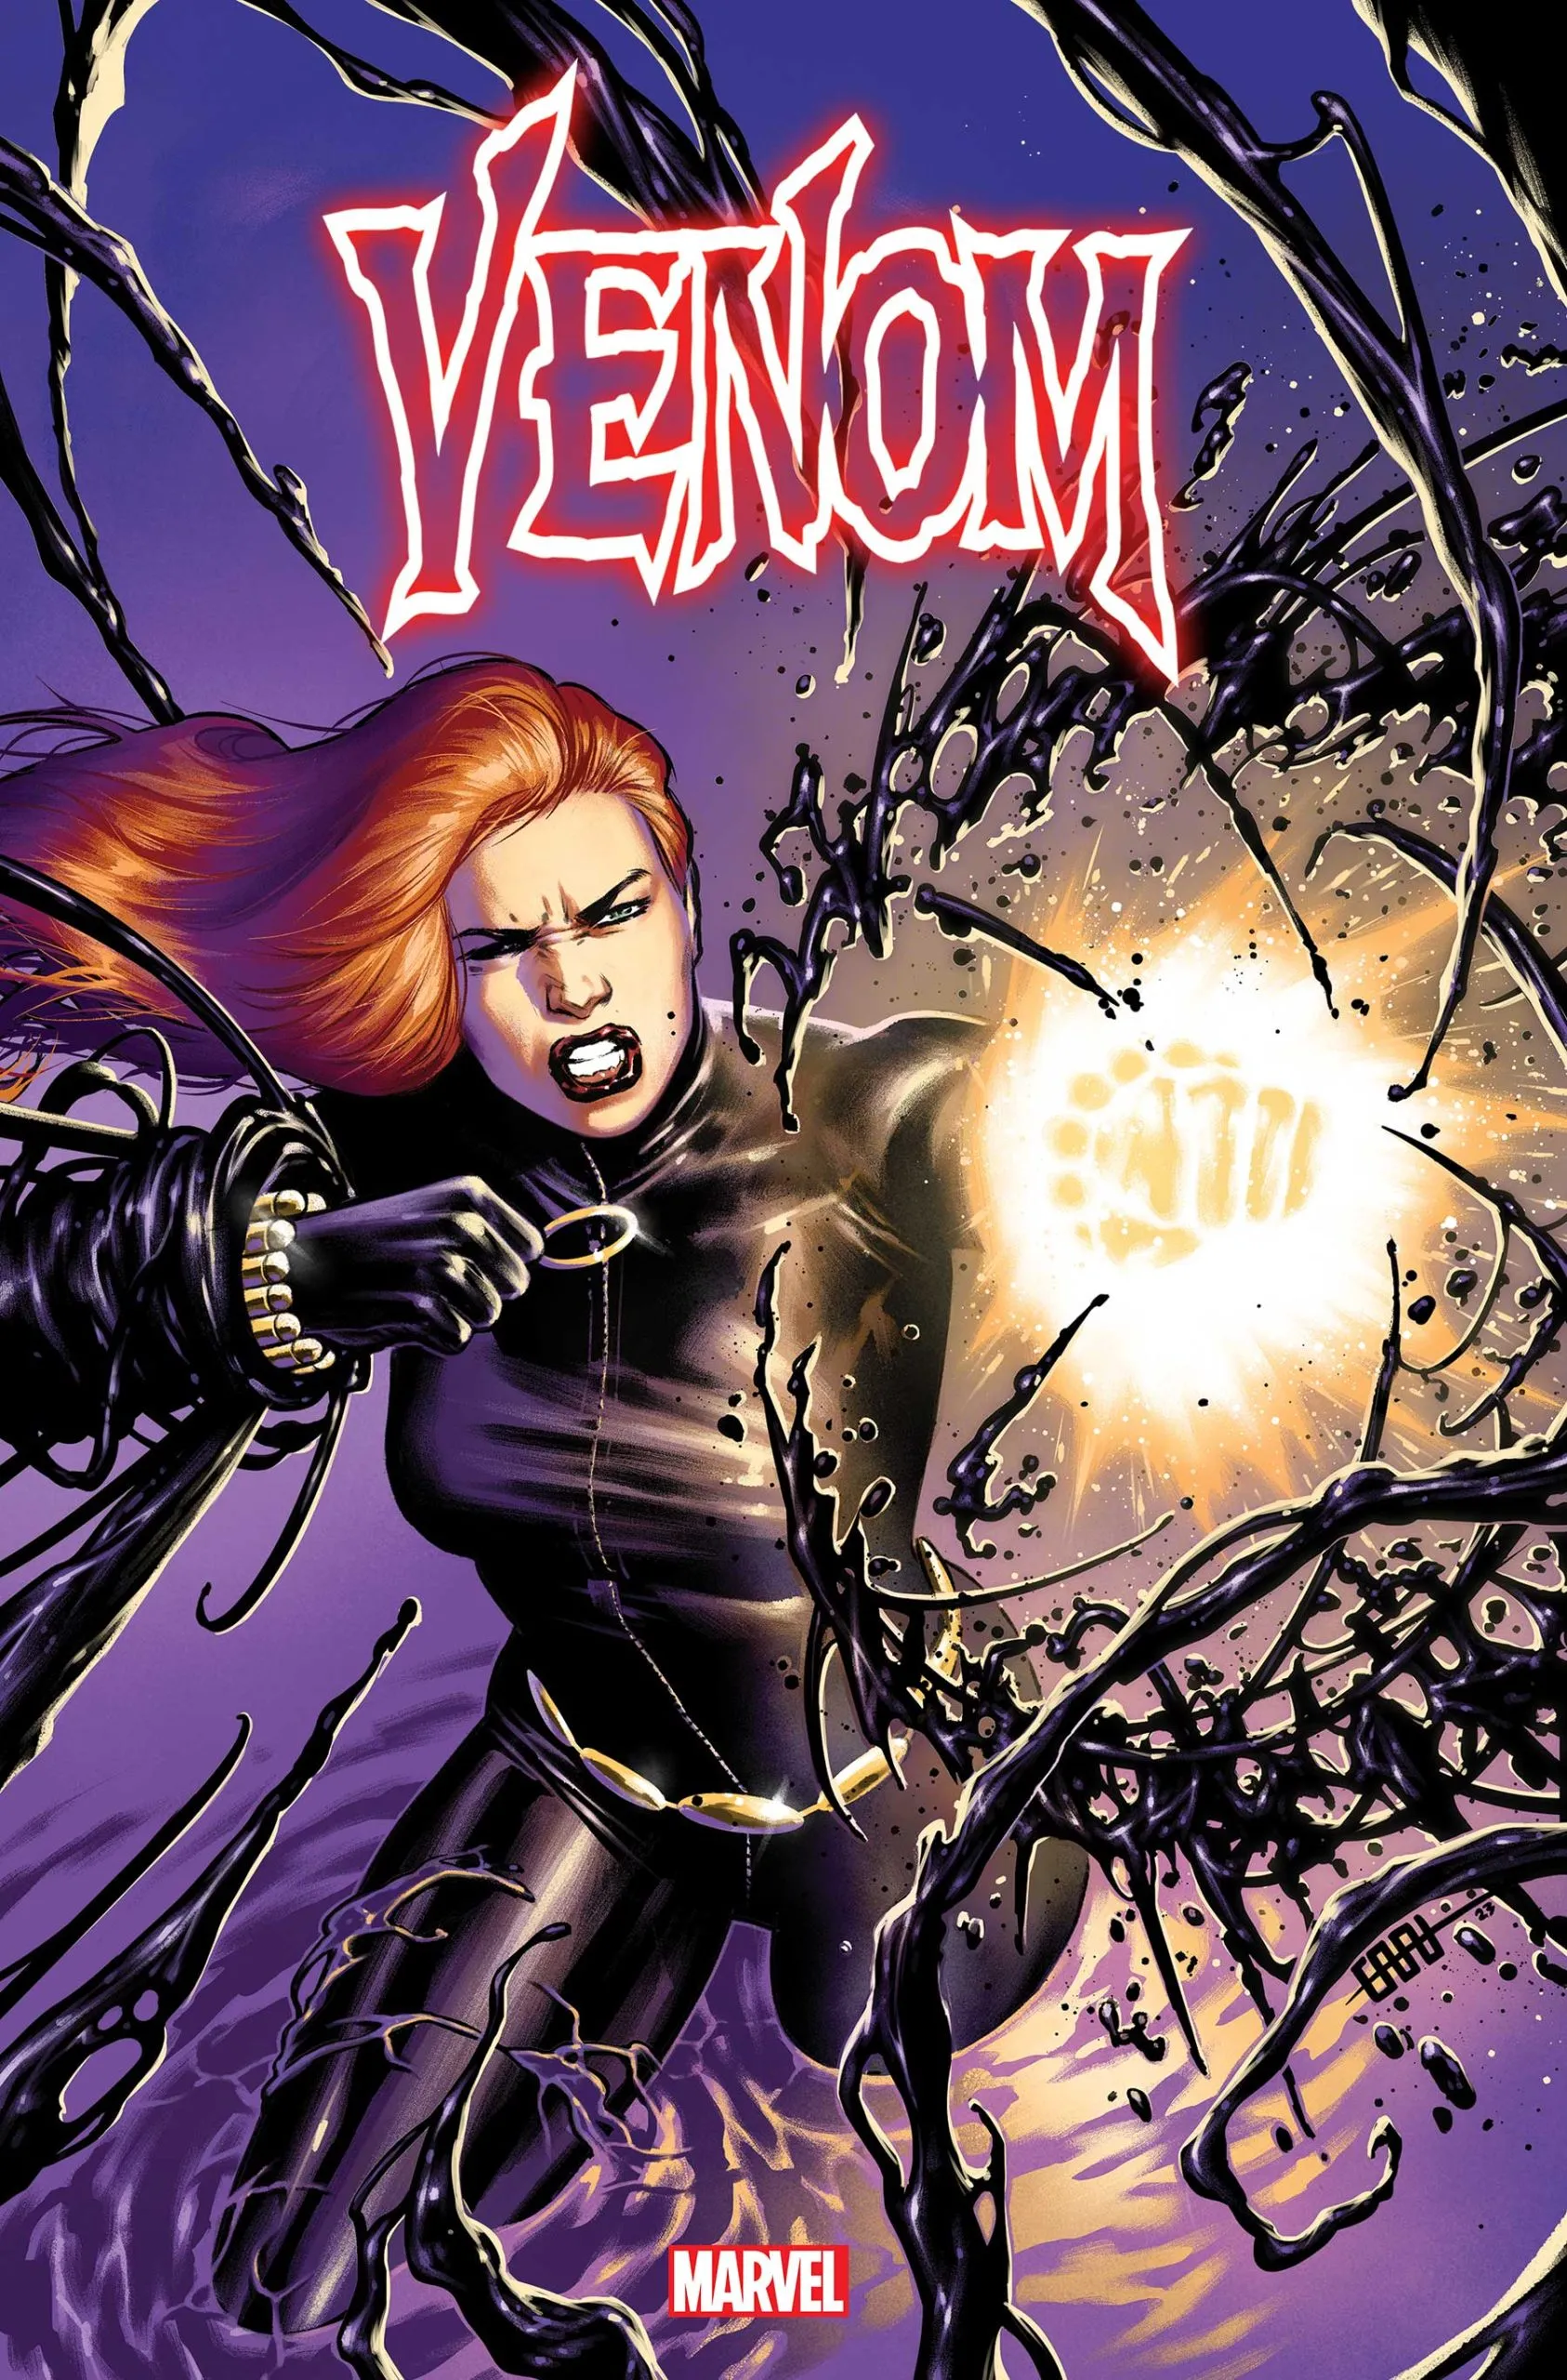 Venom #26 A Black Widow